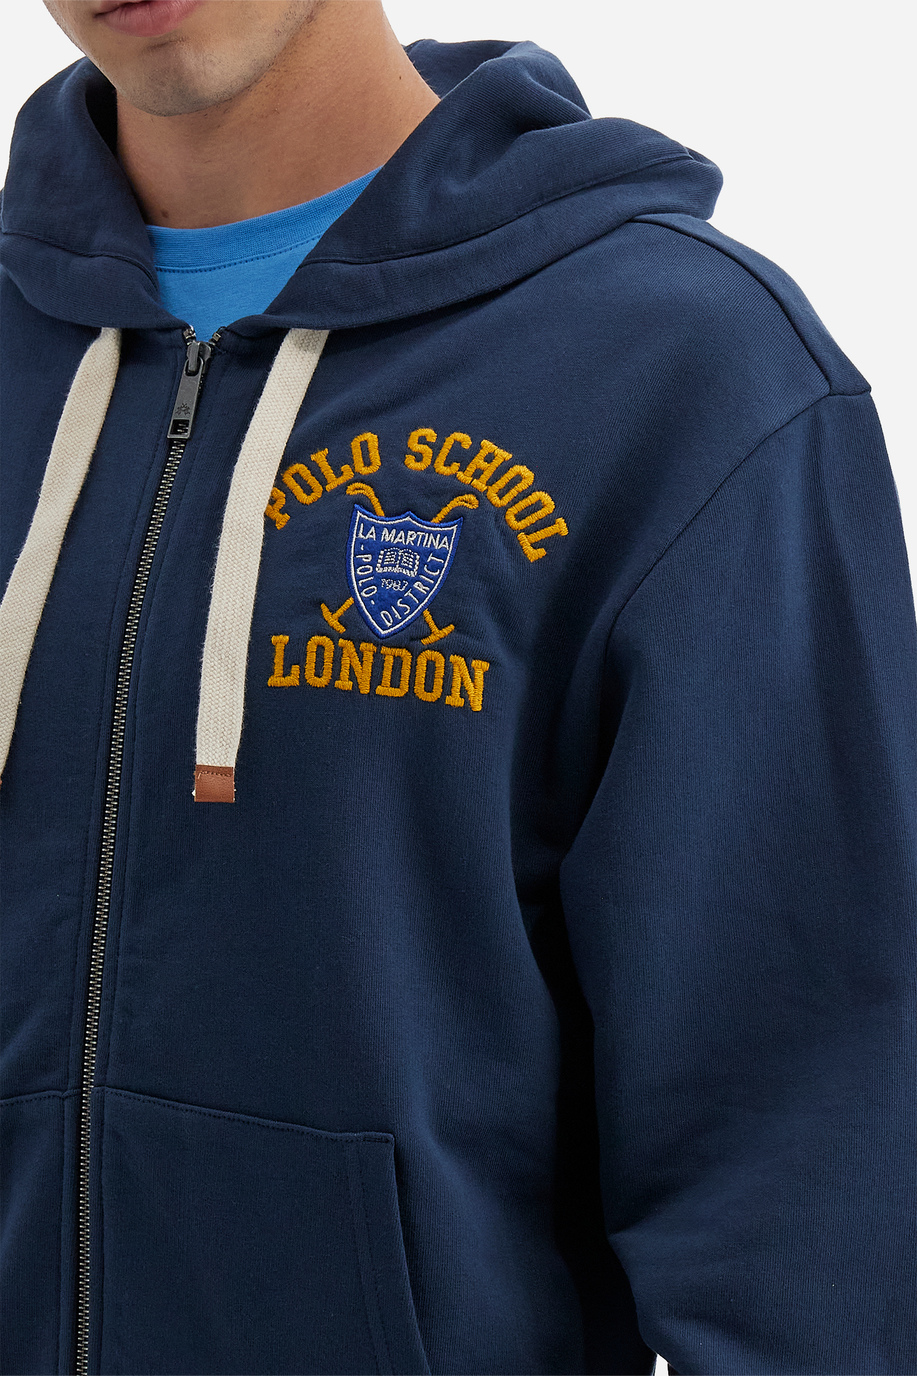 Polo Academy men's full zip hooded sweatshirt in solid color with small logo - Valoris - Knitwear & Sweatshirts | La Martina - Official Online Shop